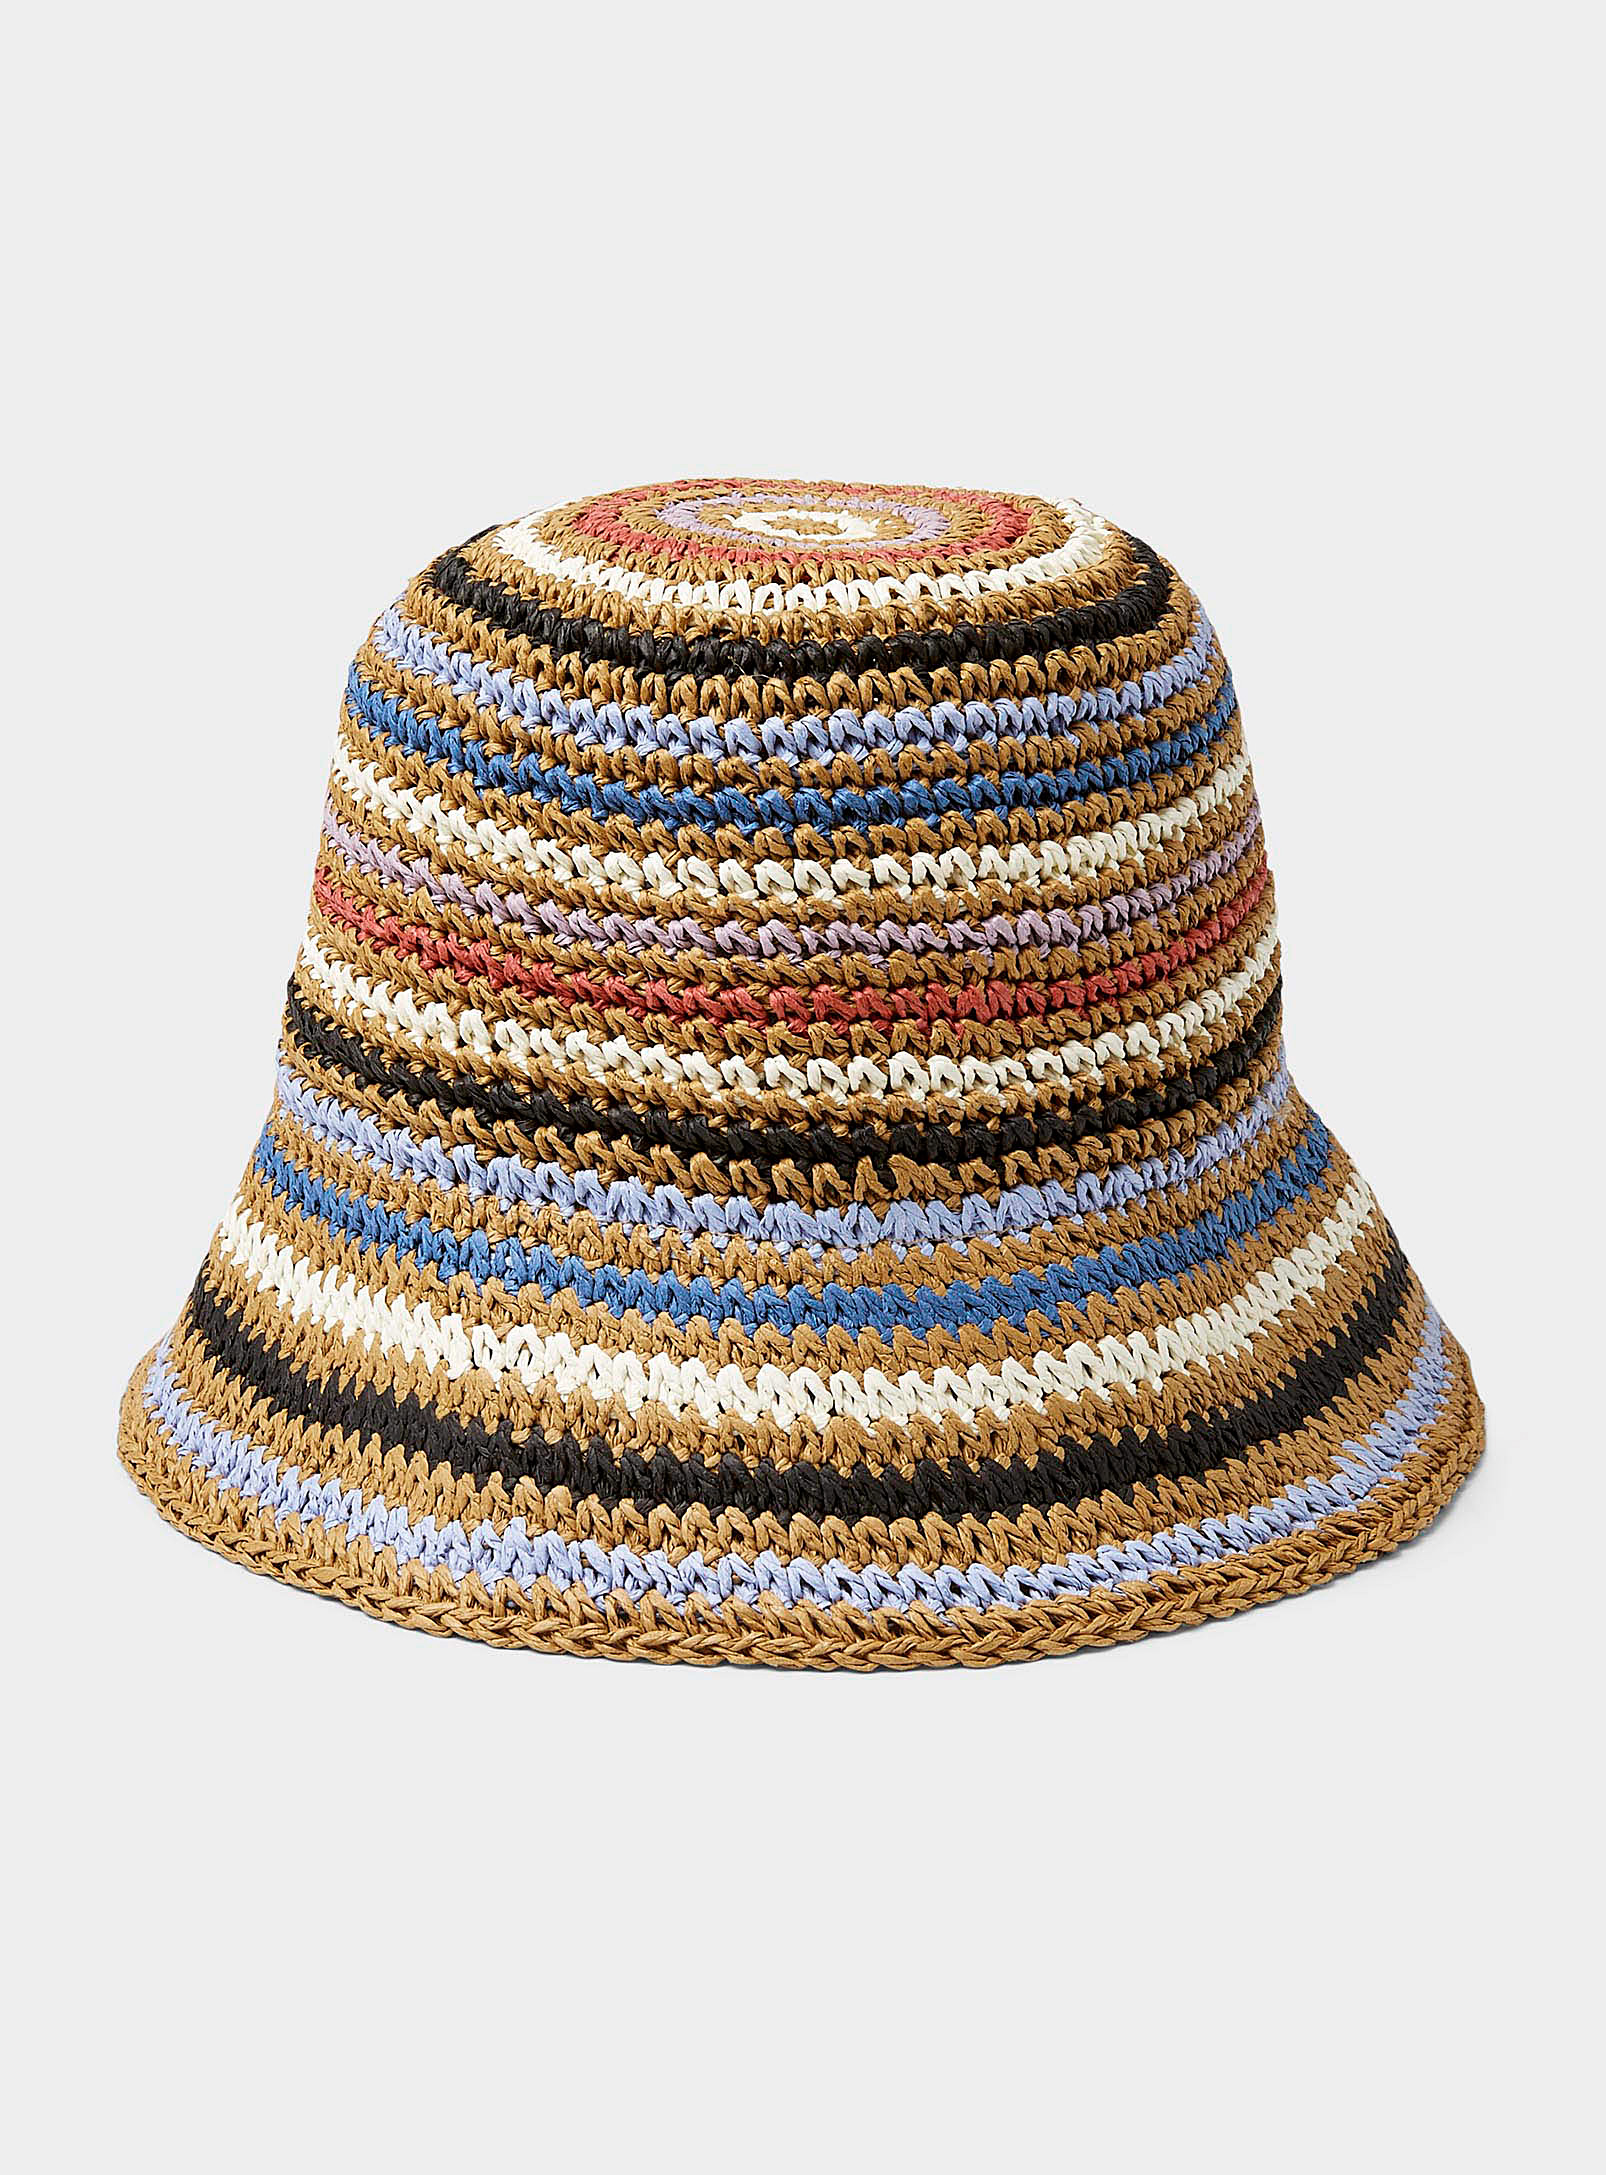 Simons - Women's Striped braided straw Cloche Hat